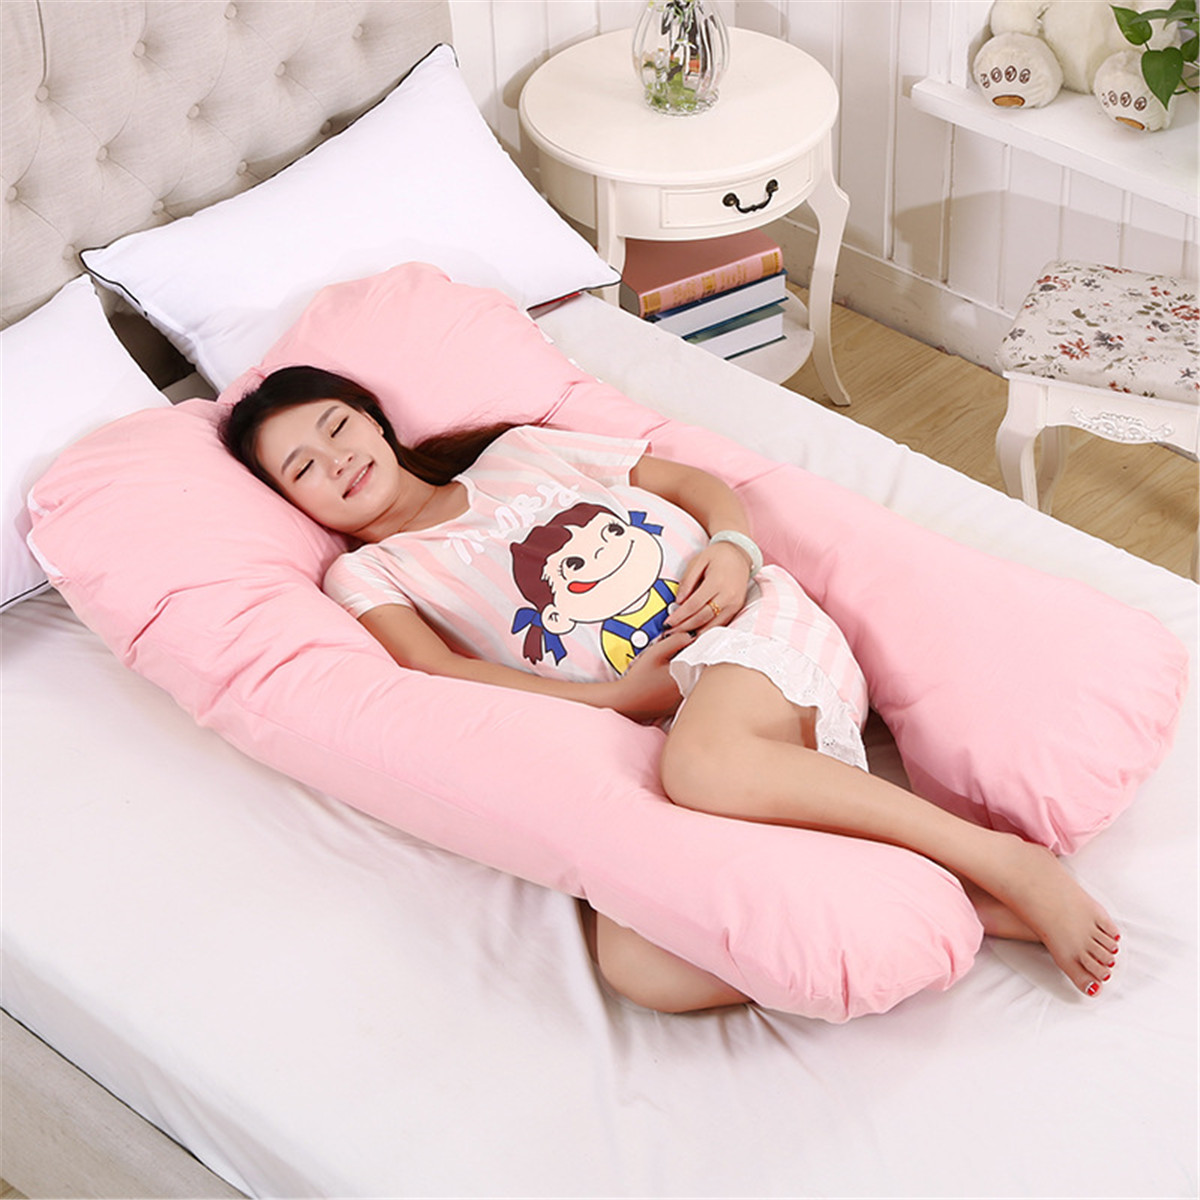 Family-Maternity-Pillow-Pregnancy-Nursing-Sleeping-Body-Support-Feeding-Cofortable-1259436-4